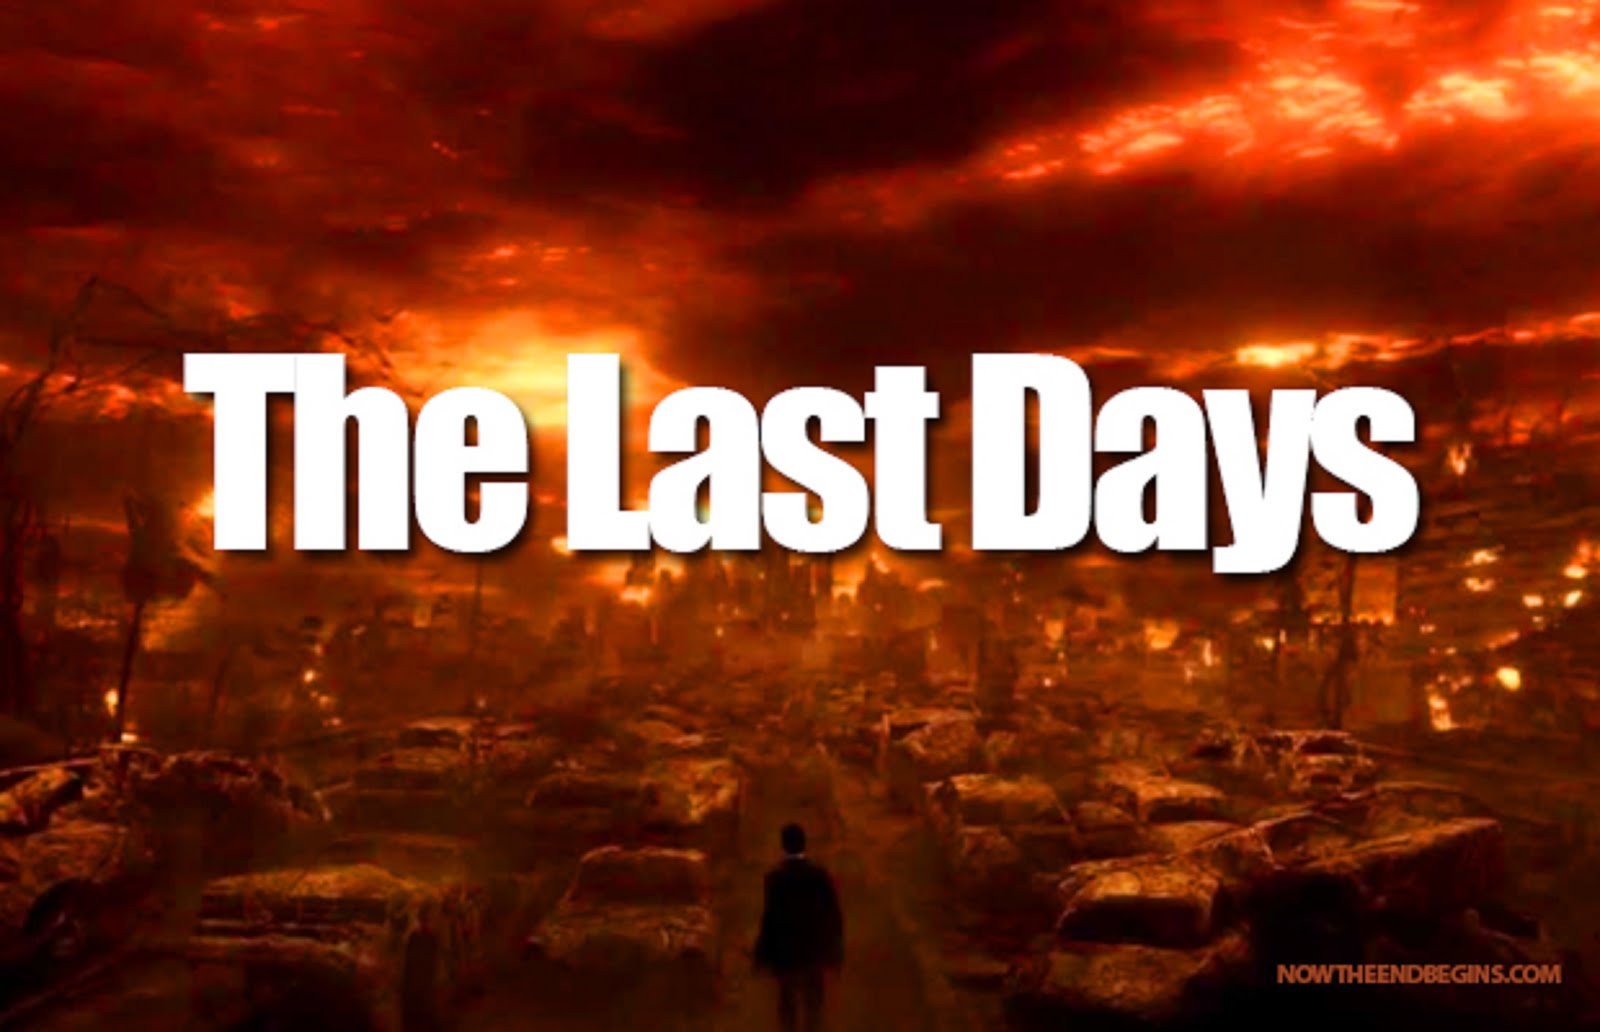 THE LAST DAYS